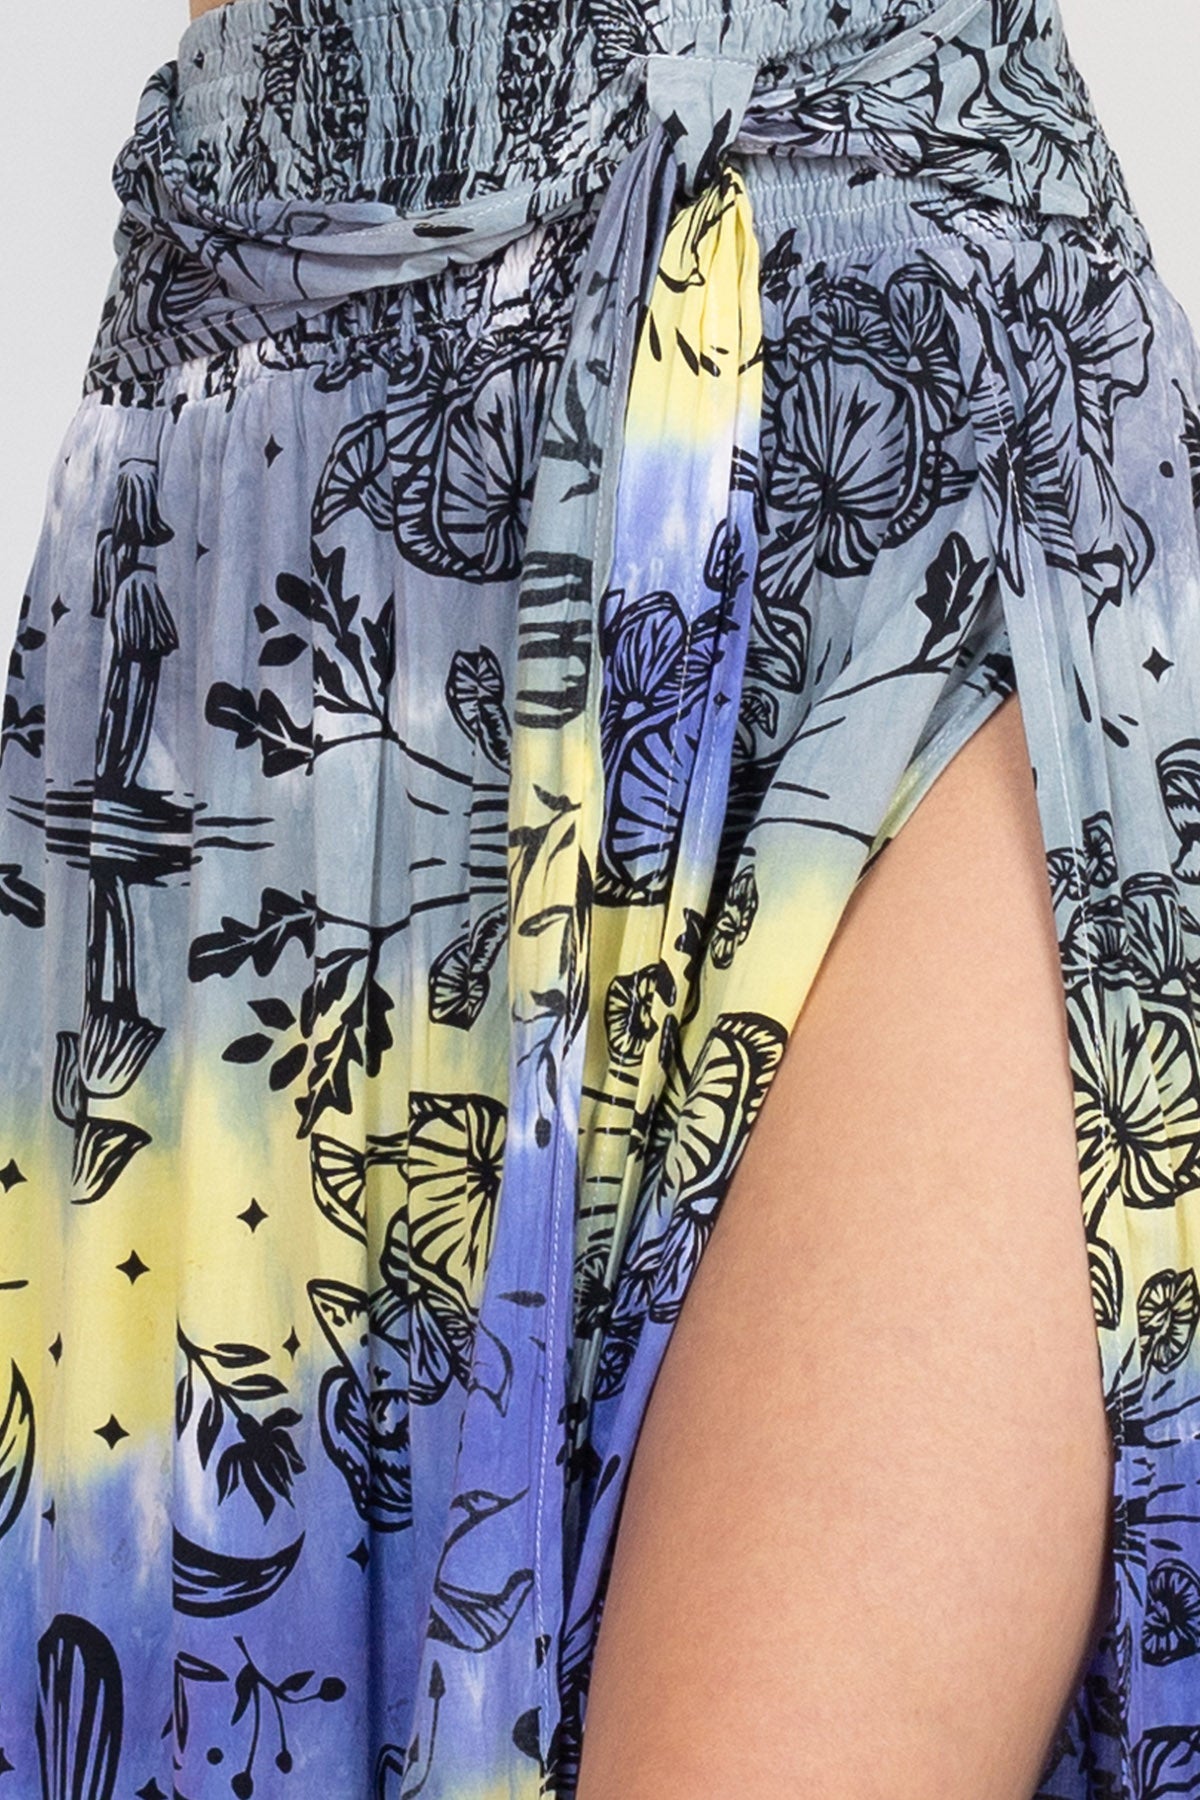 Mushroom Tie-Dye Maxi Skirt